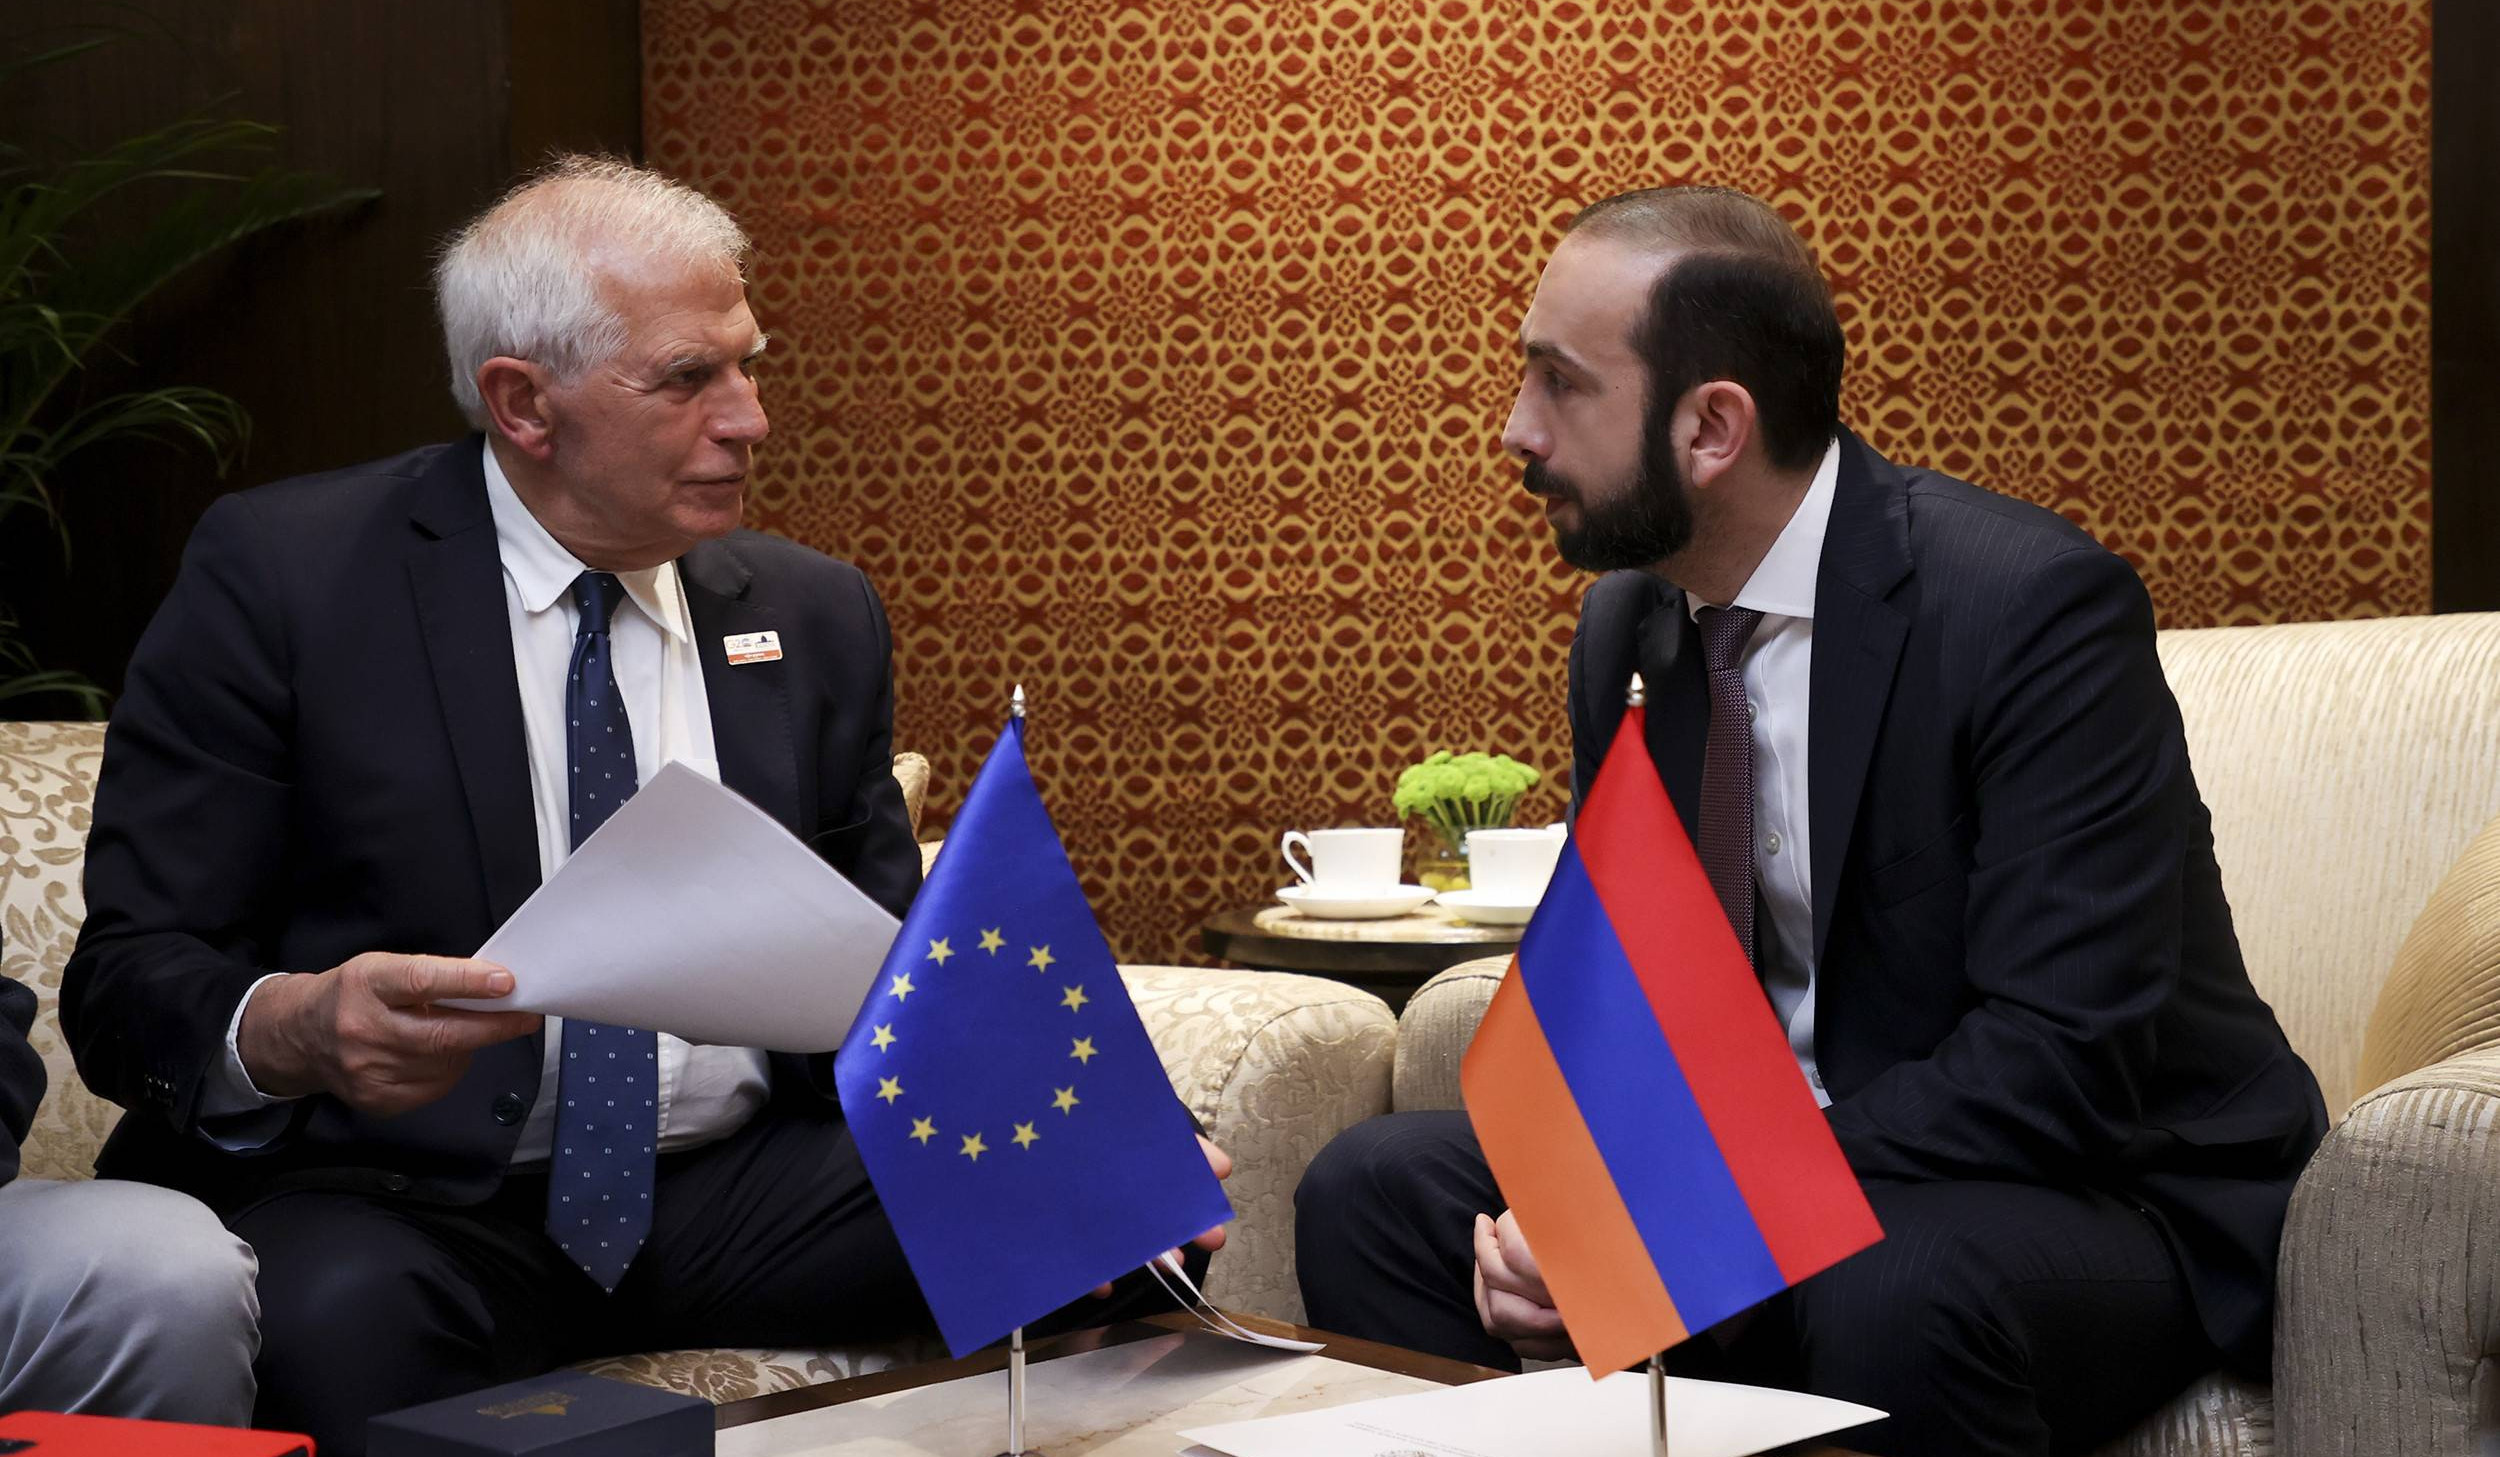 Ararat Mirzoyan presented to Josep Borrell developments in process of regulating Armenia-Azerbaijan relations